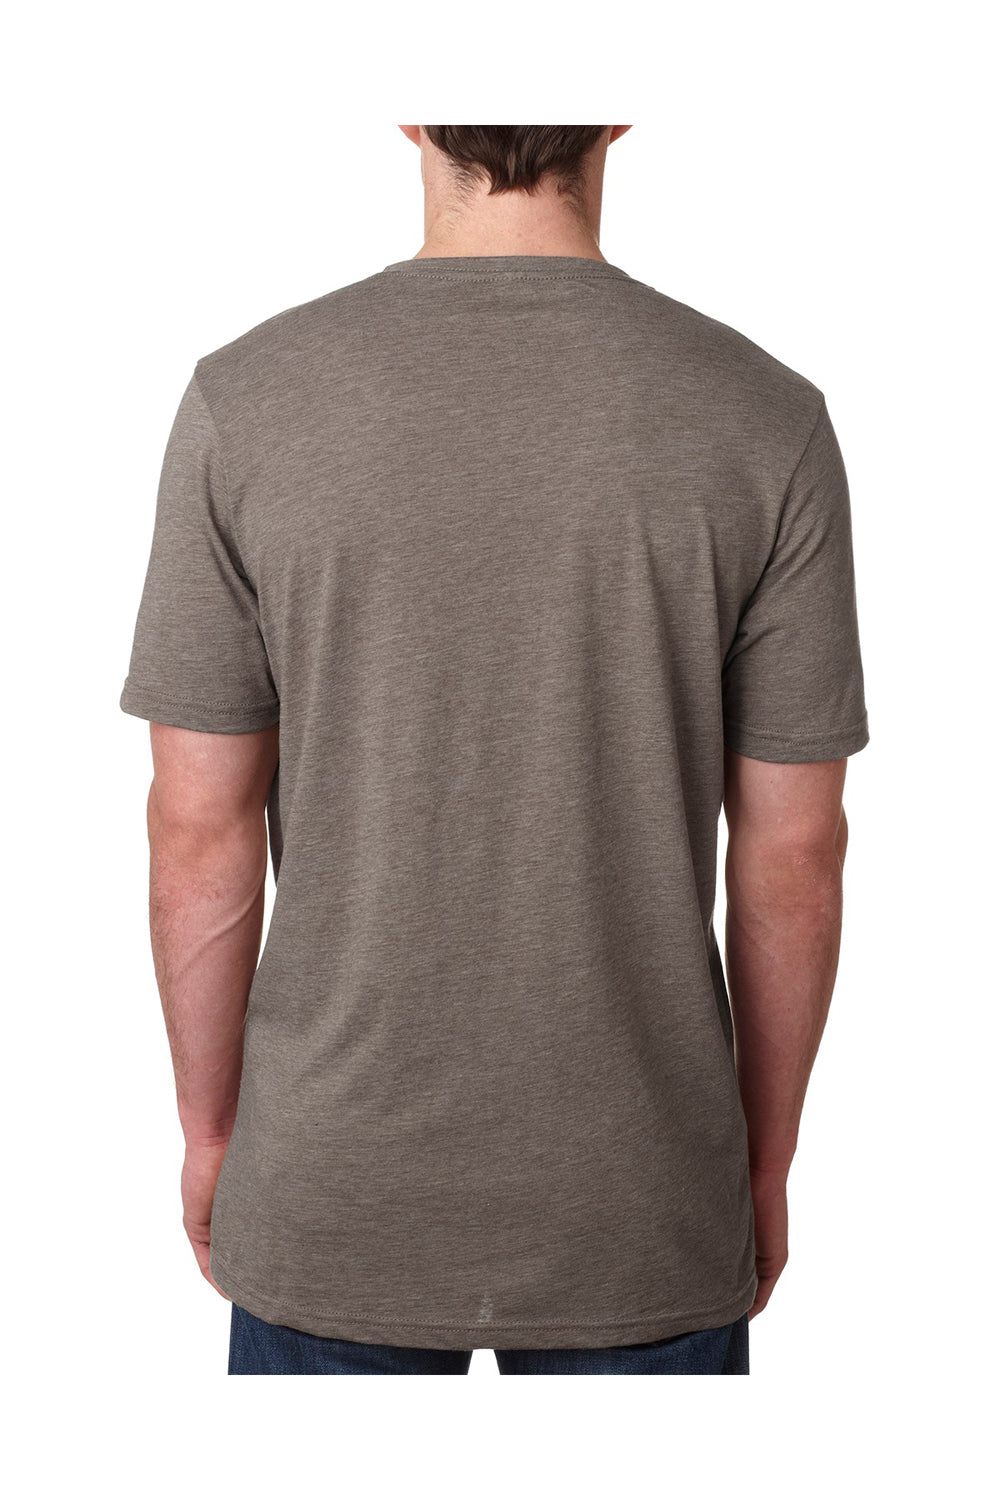 Next Level 6200 Mens Jersey Short Sleeve Crewneck T-Shirt Ash Grey Back